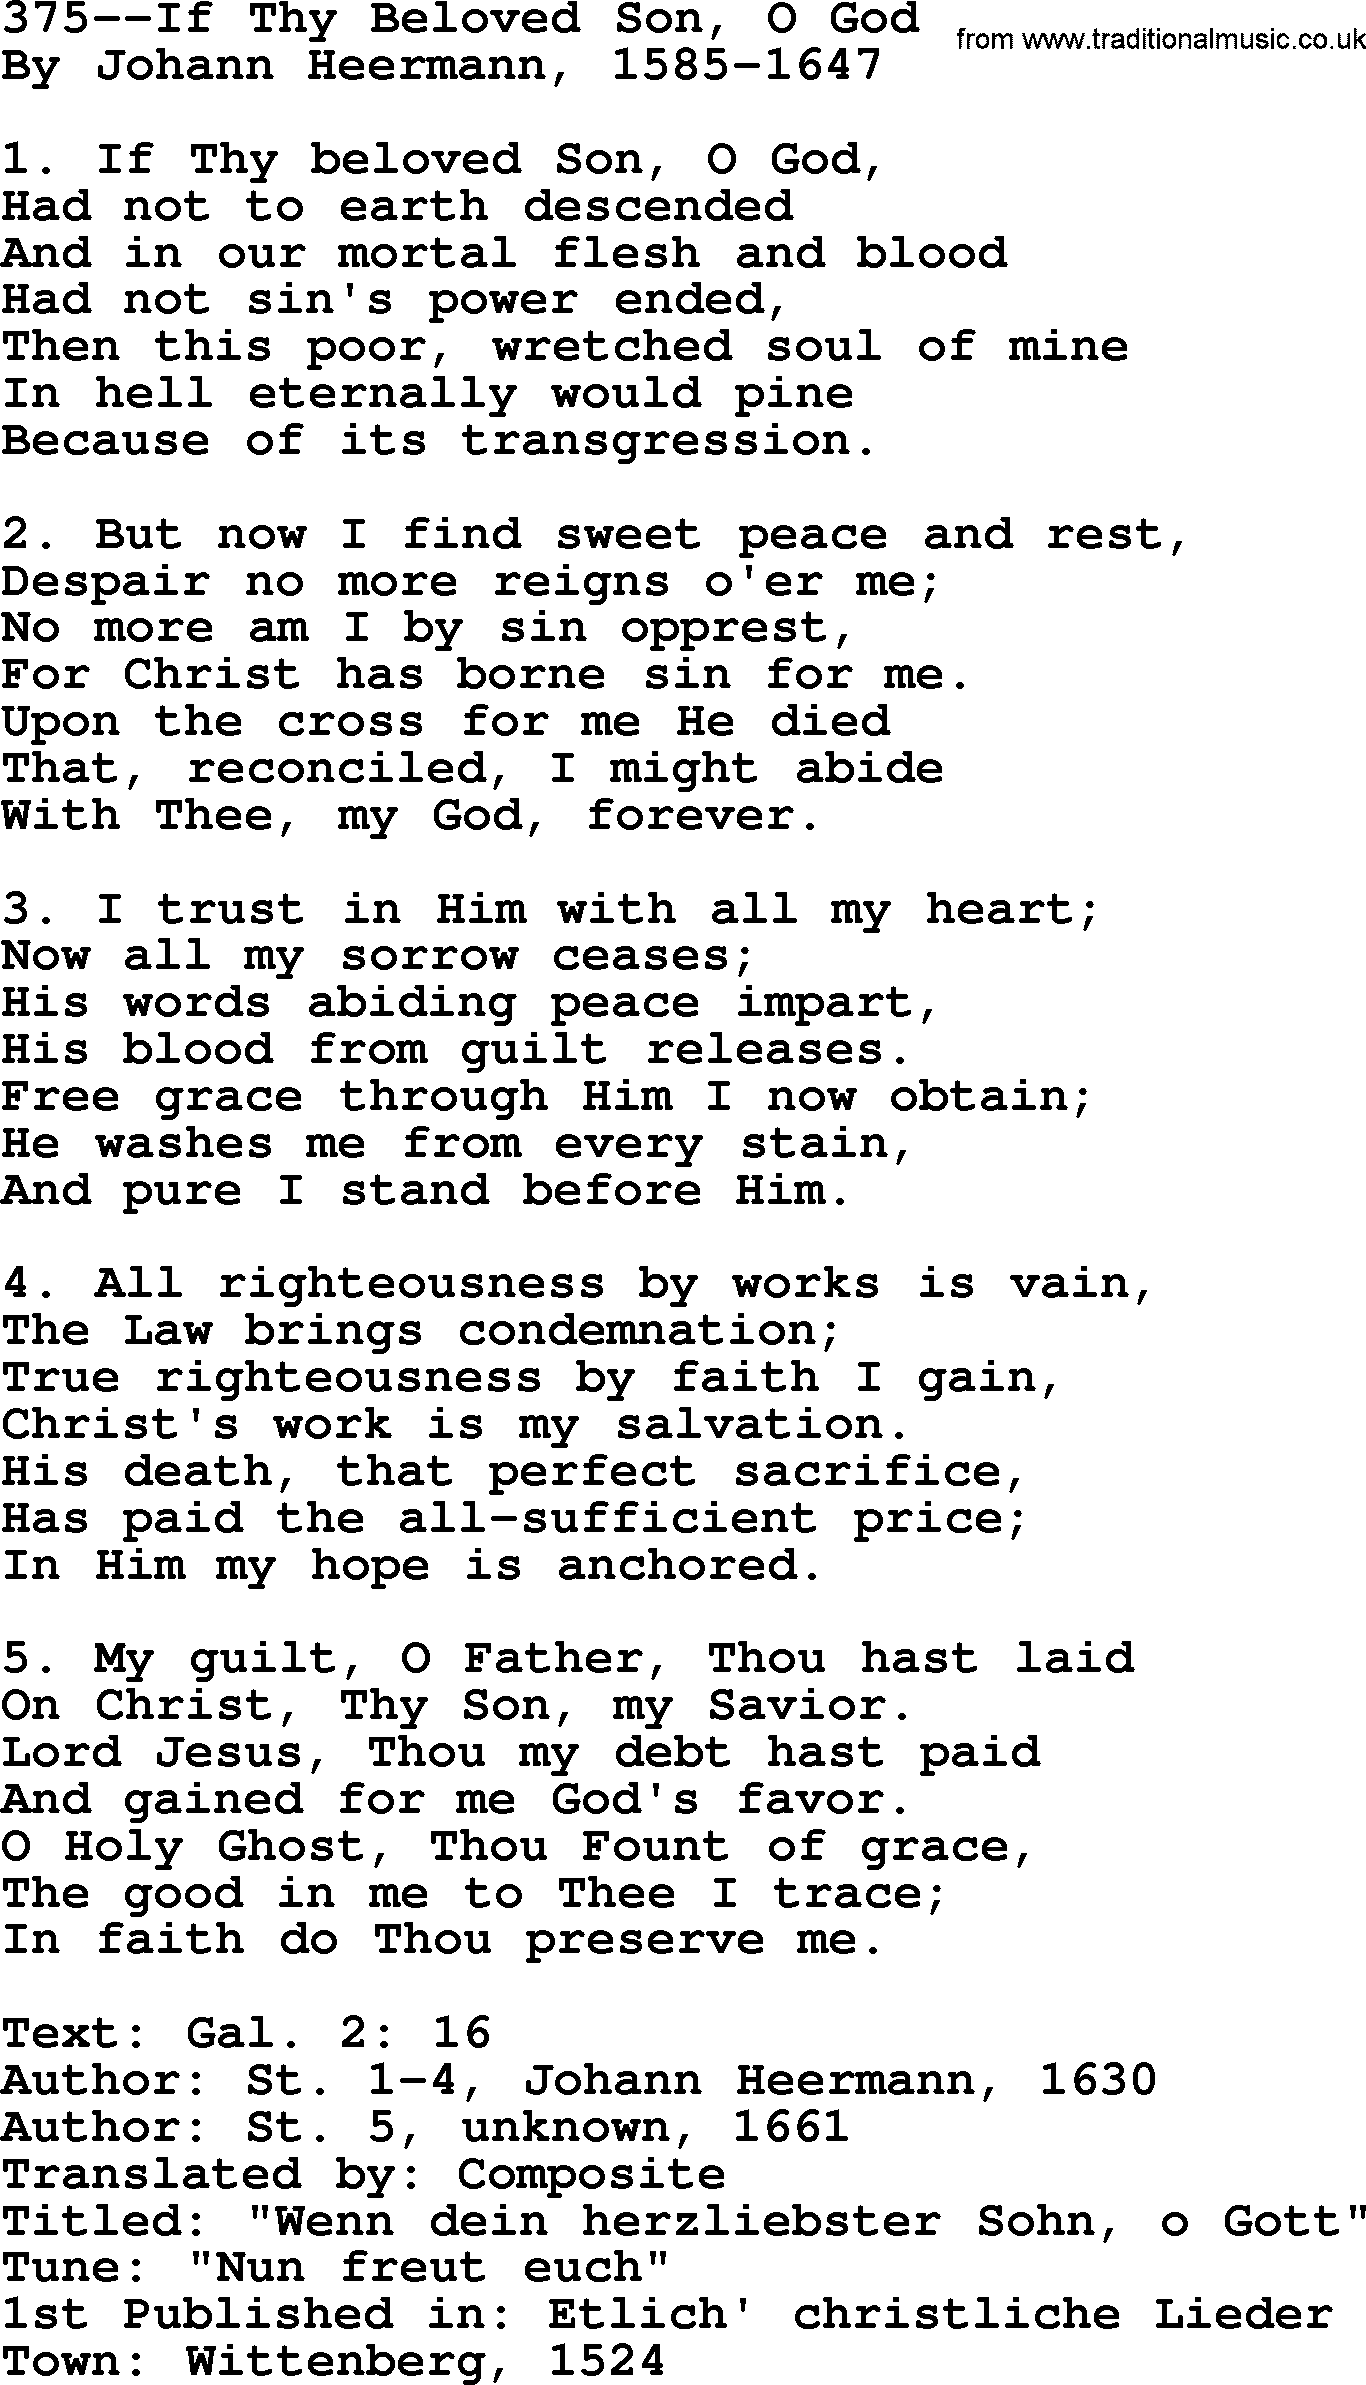 Lutheran Hymn: 375--If Thy Beloved Son, O God.txt lyrics with PDF